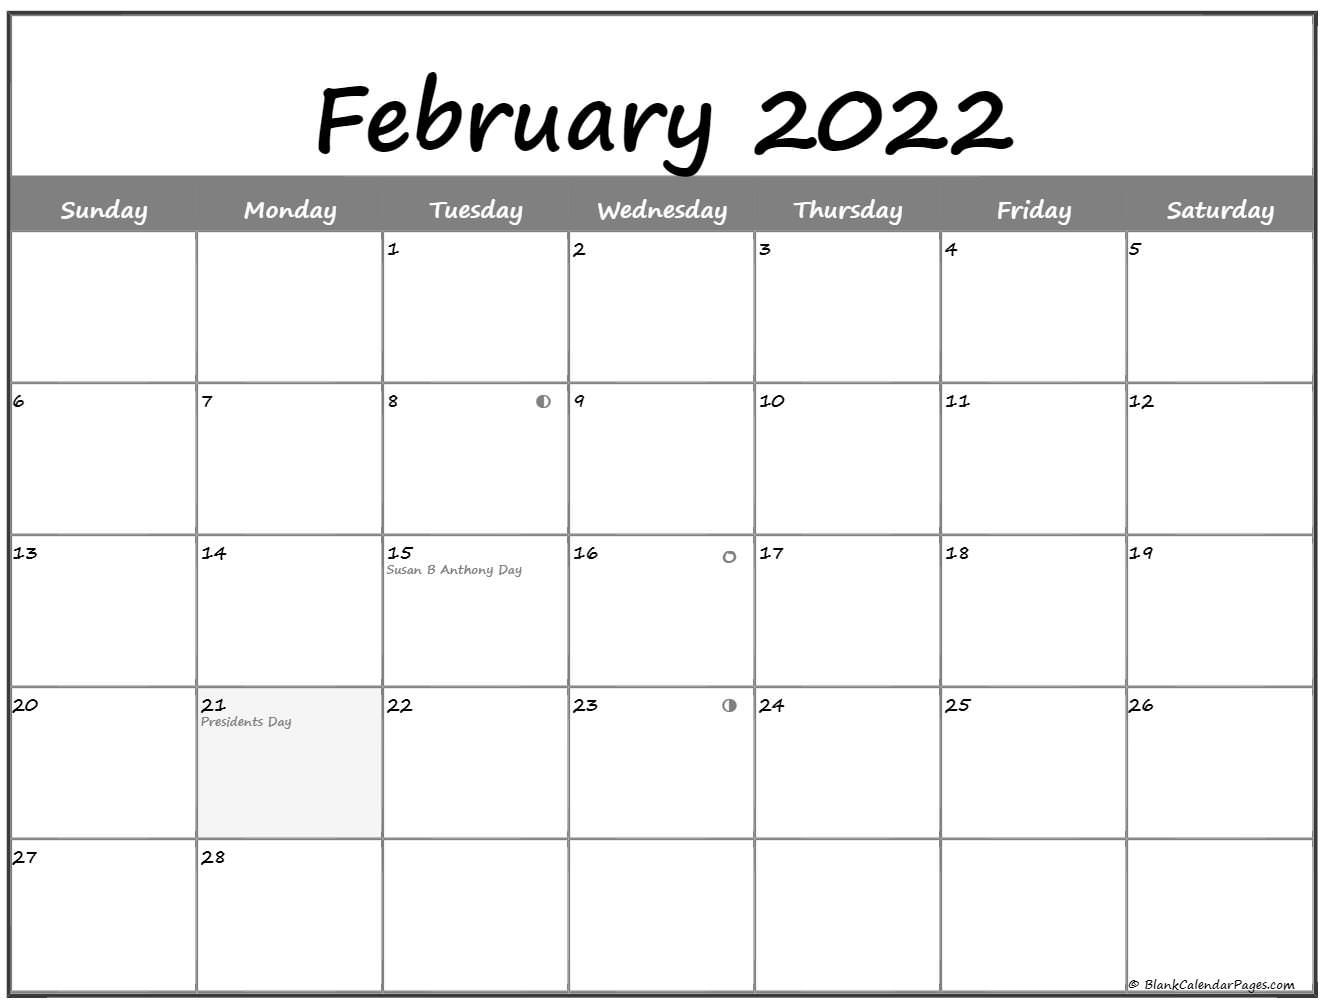 February 2022 Lunar Calendar | Moon Phase Calendar